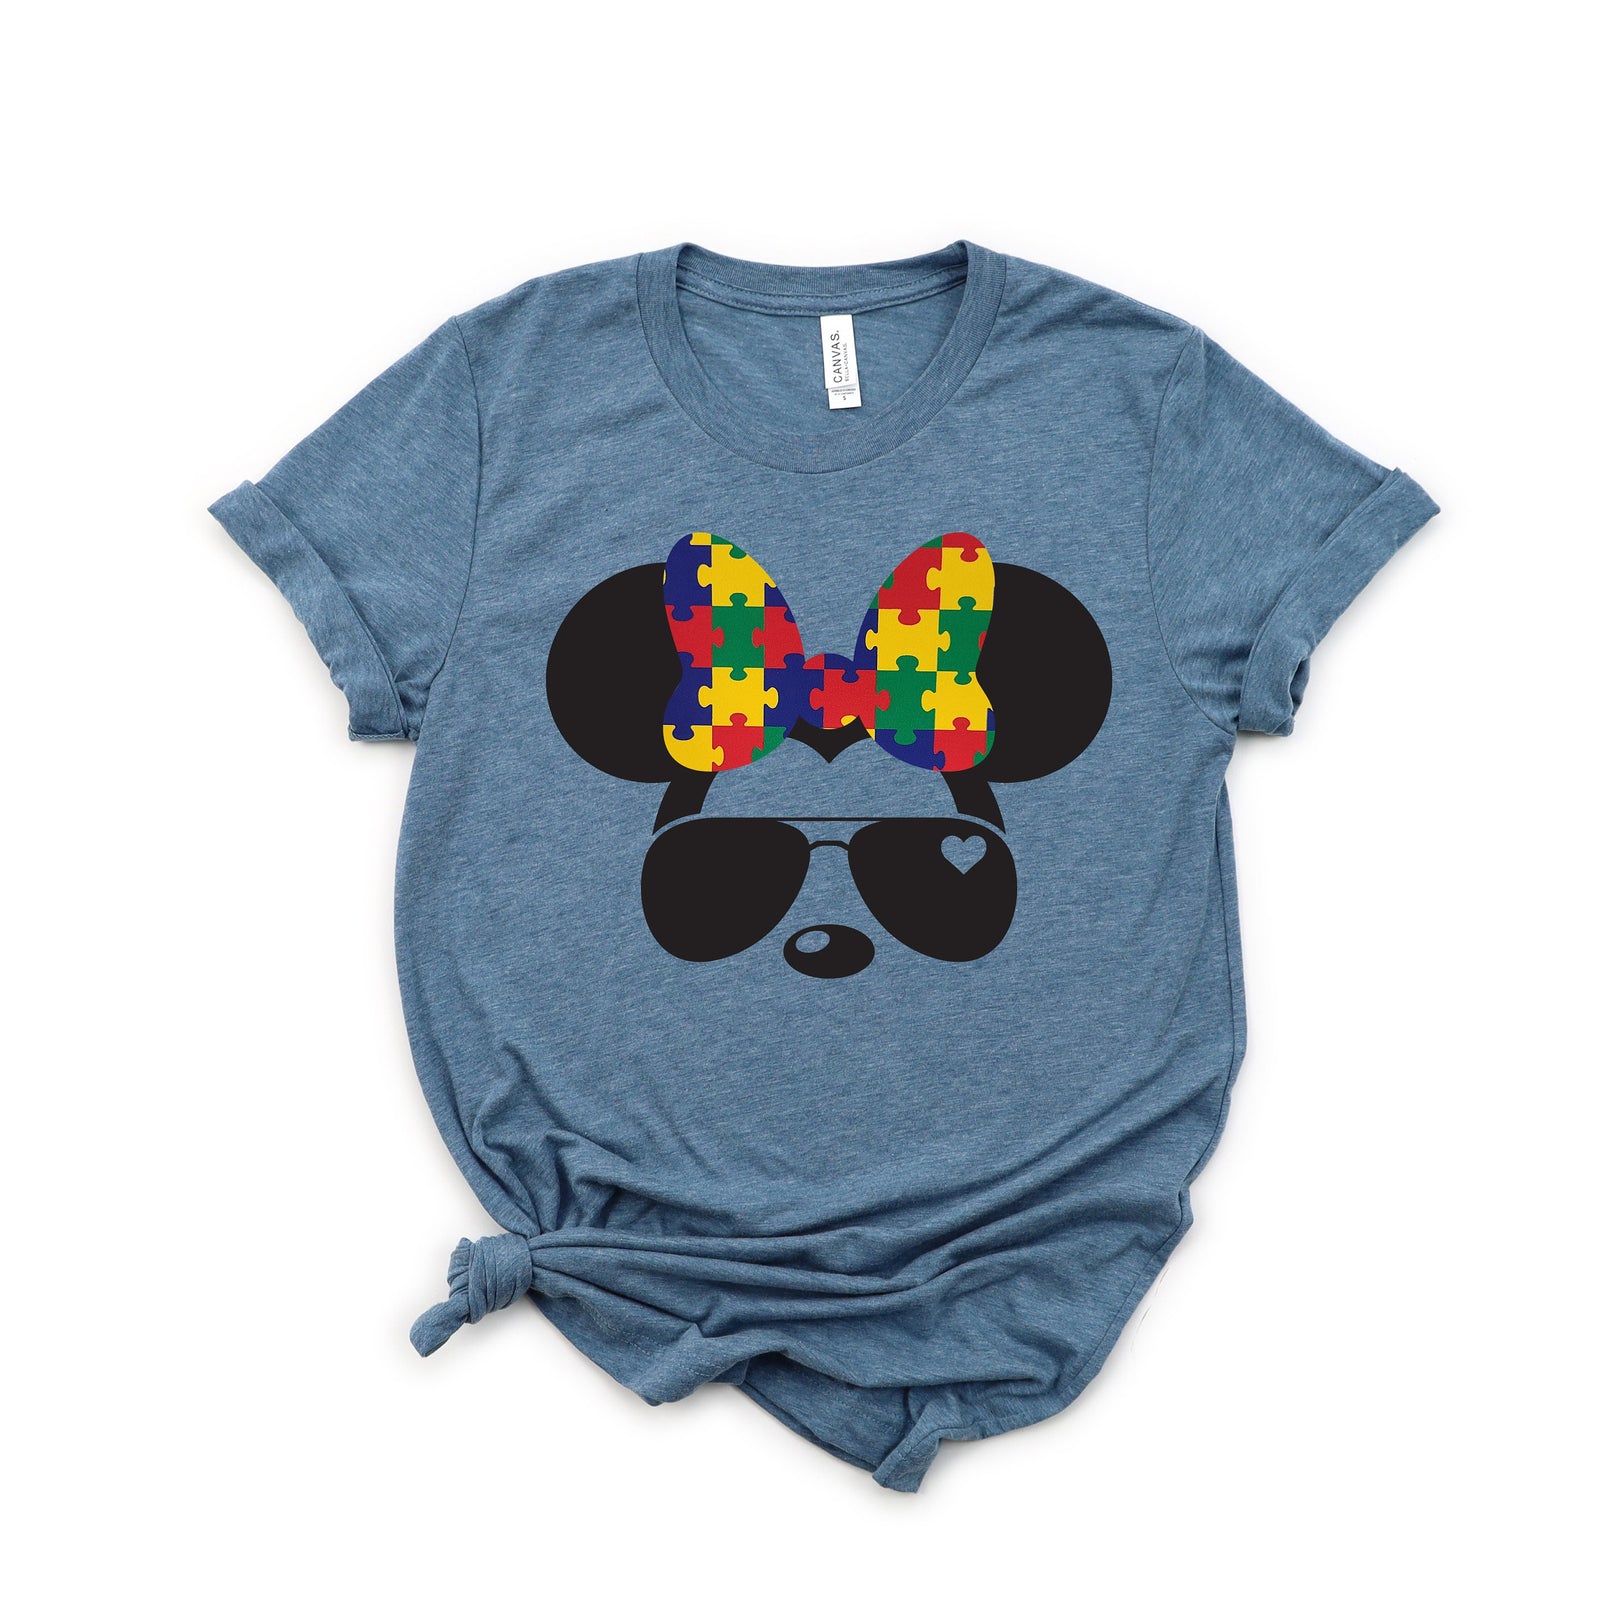 Minnie Mouse Adult Unisex T Shirt - Aviators - Puzzle Piece Bow - Autism Awareness Shirt